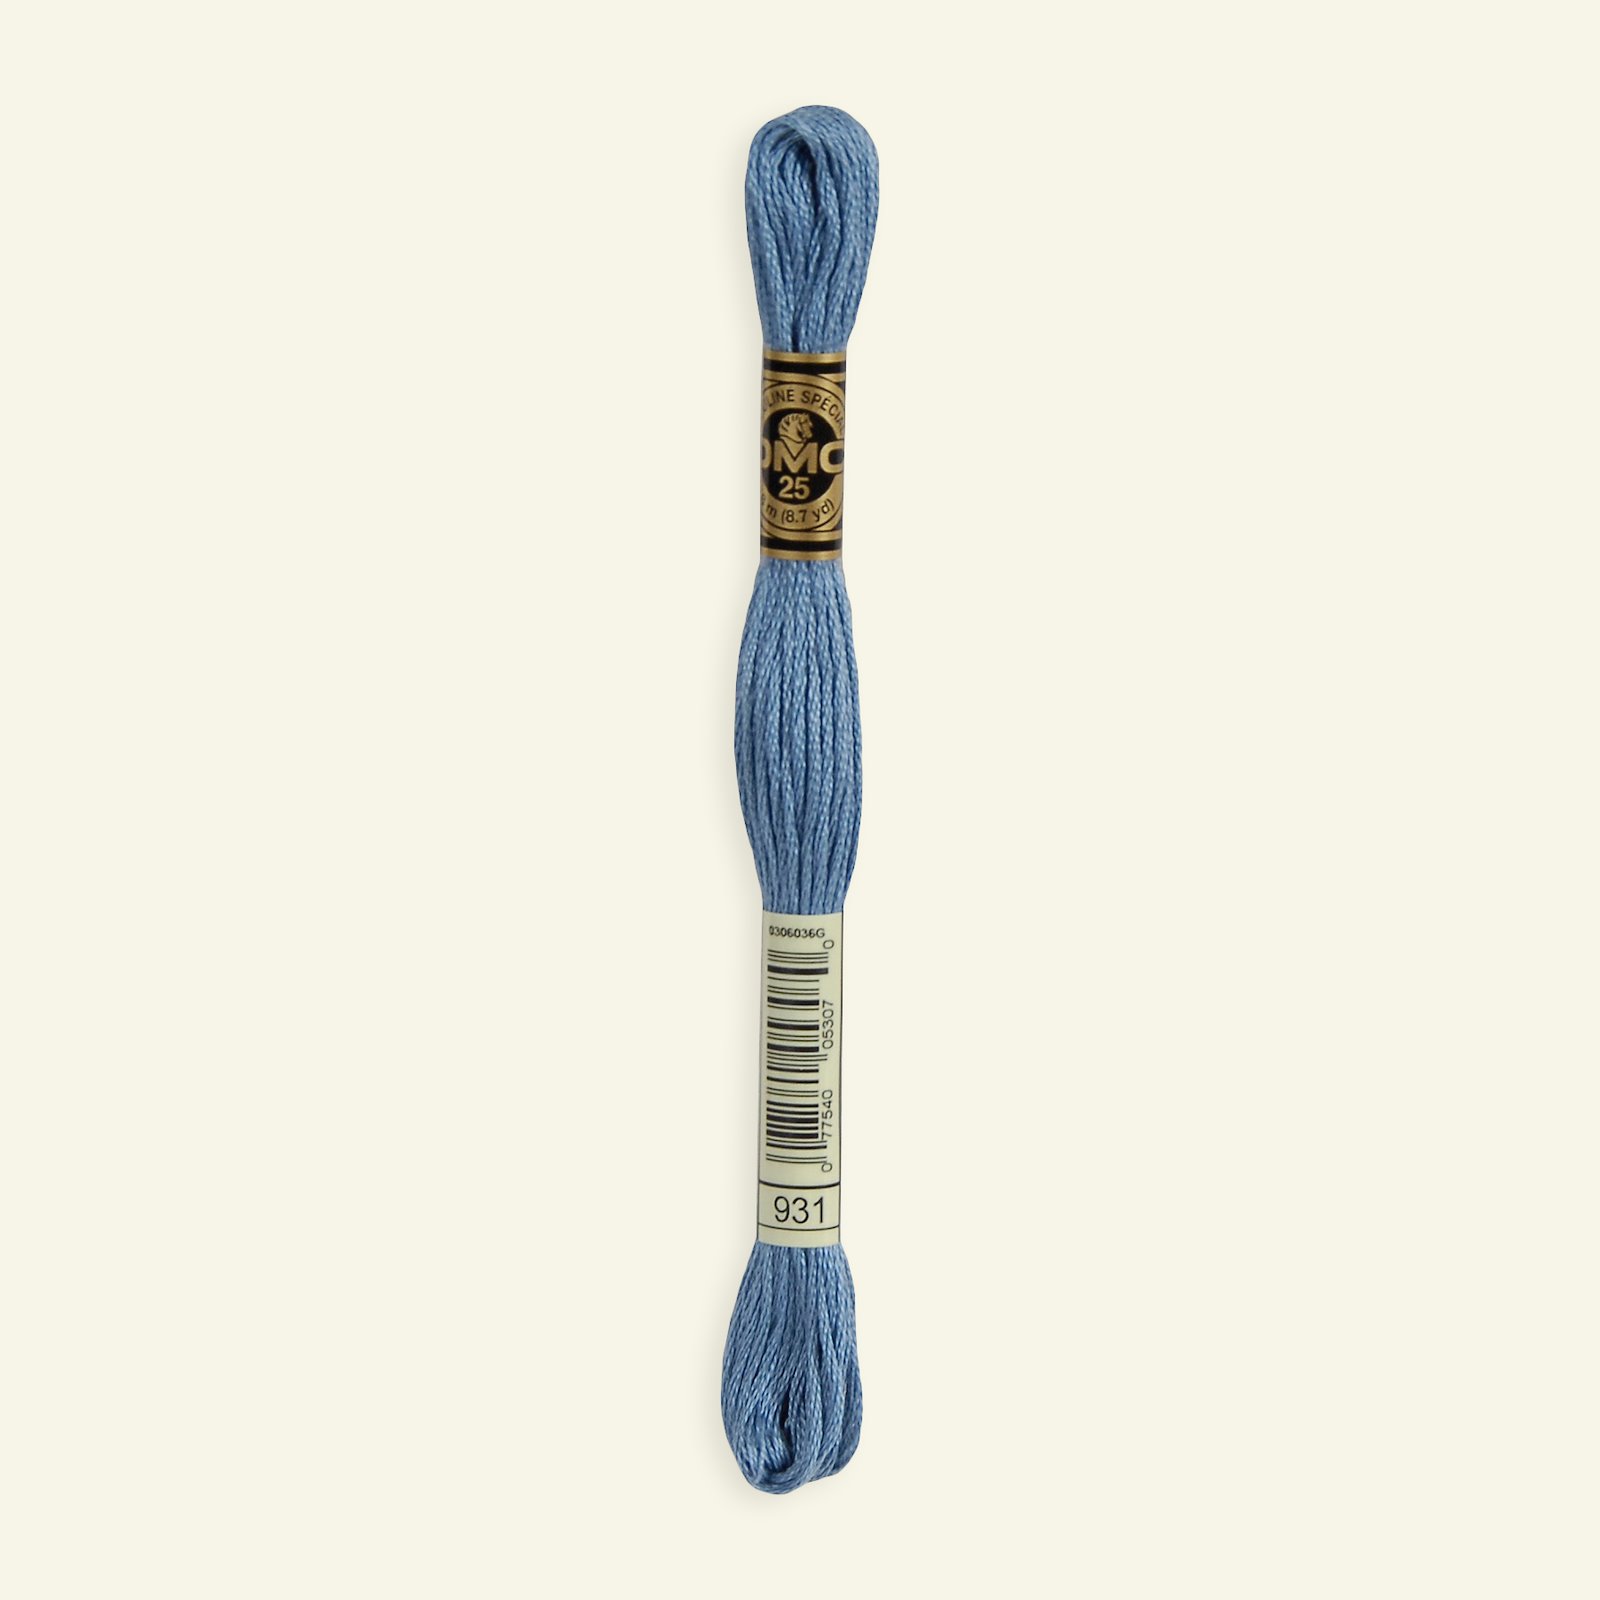 The Urban Store Embroidery Thread Medium Antique Blue DMC 977 RRP 1.40 CLEARANCE XL 99p